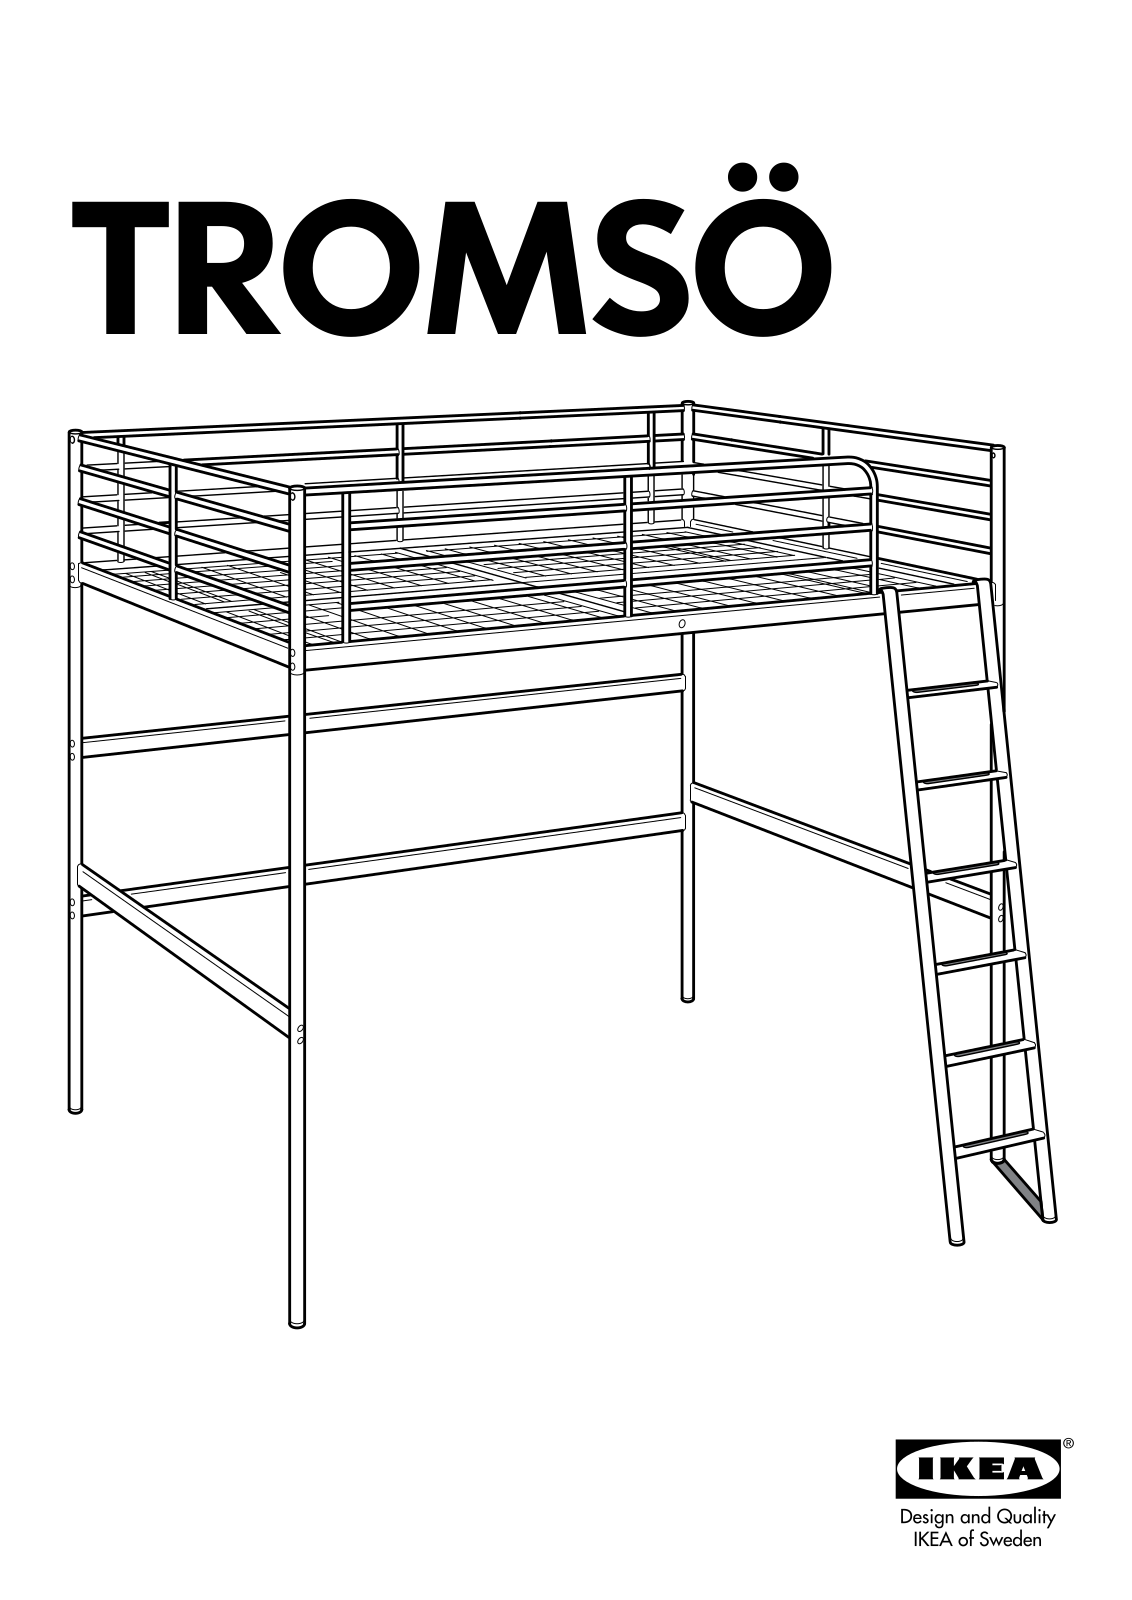 IKEA TROMSÖ LOFT BEDFRAME FULL/DOUBLE User Manual